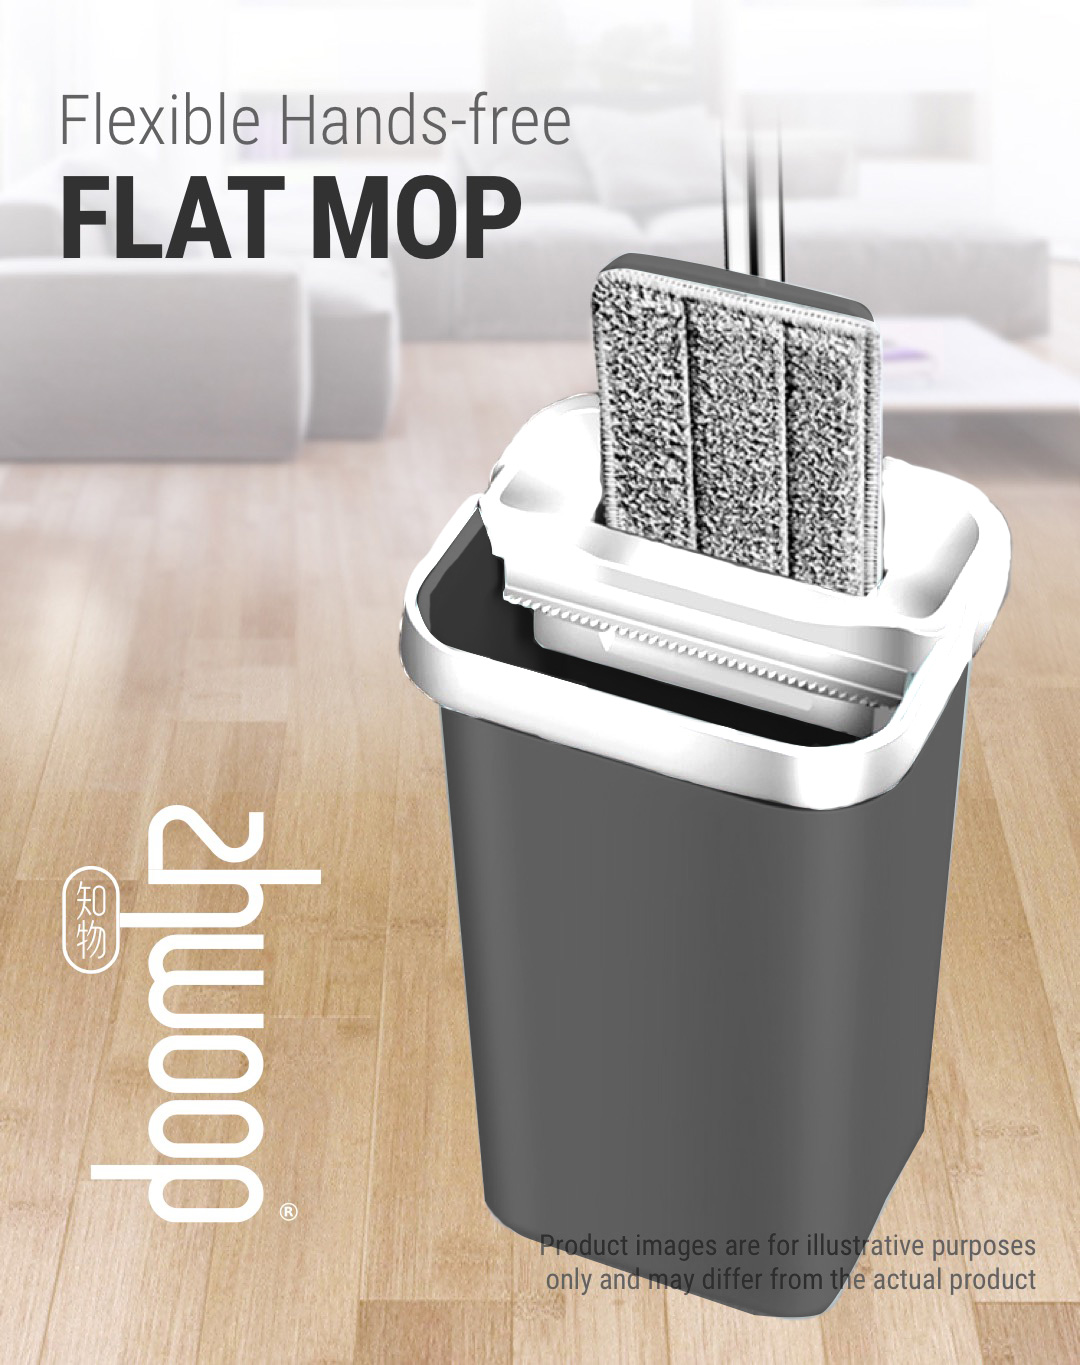 Zhwoop Flexible Hands-free Flat Mop